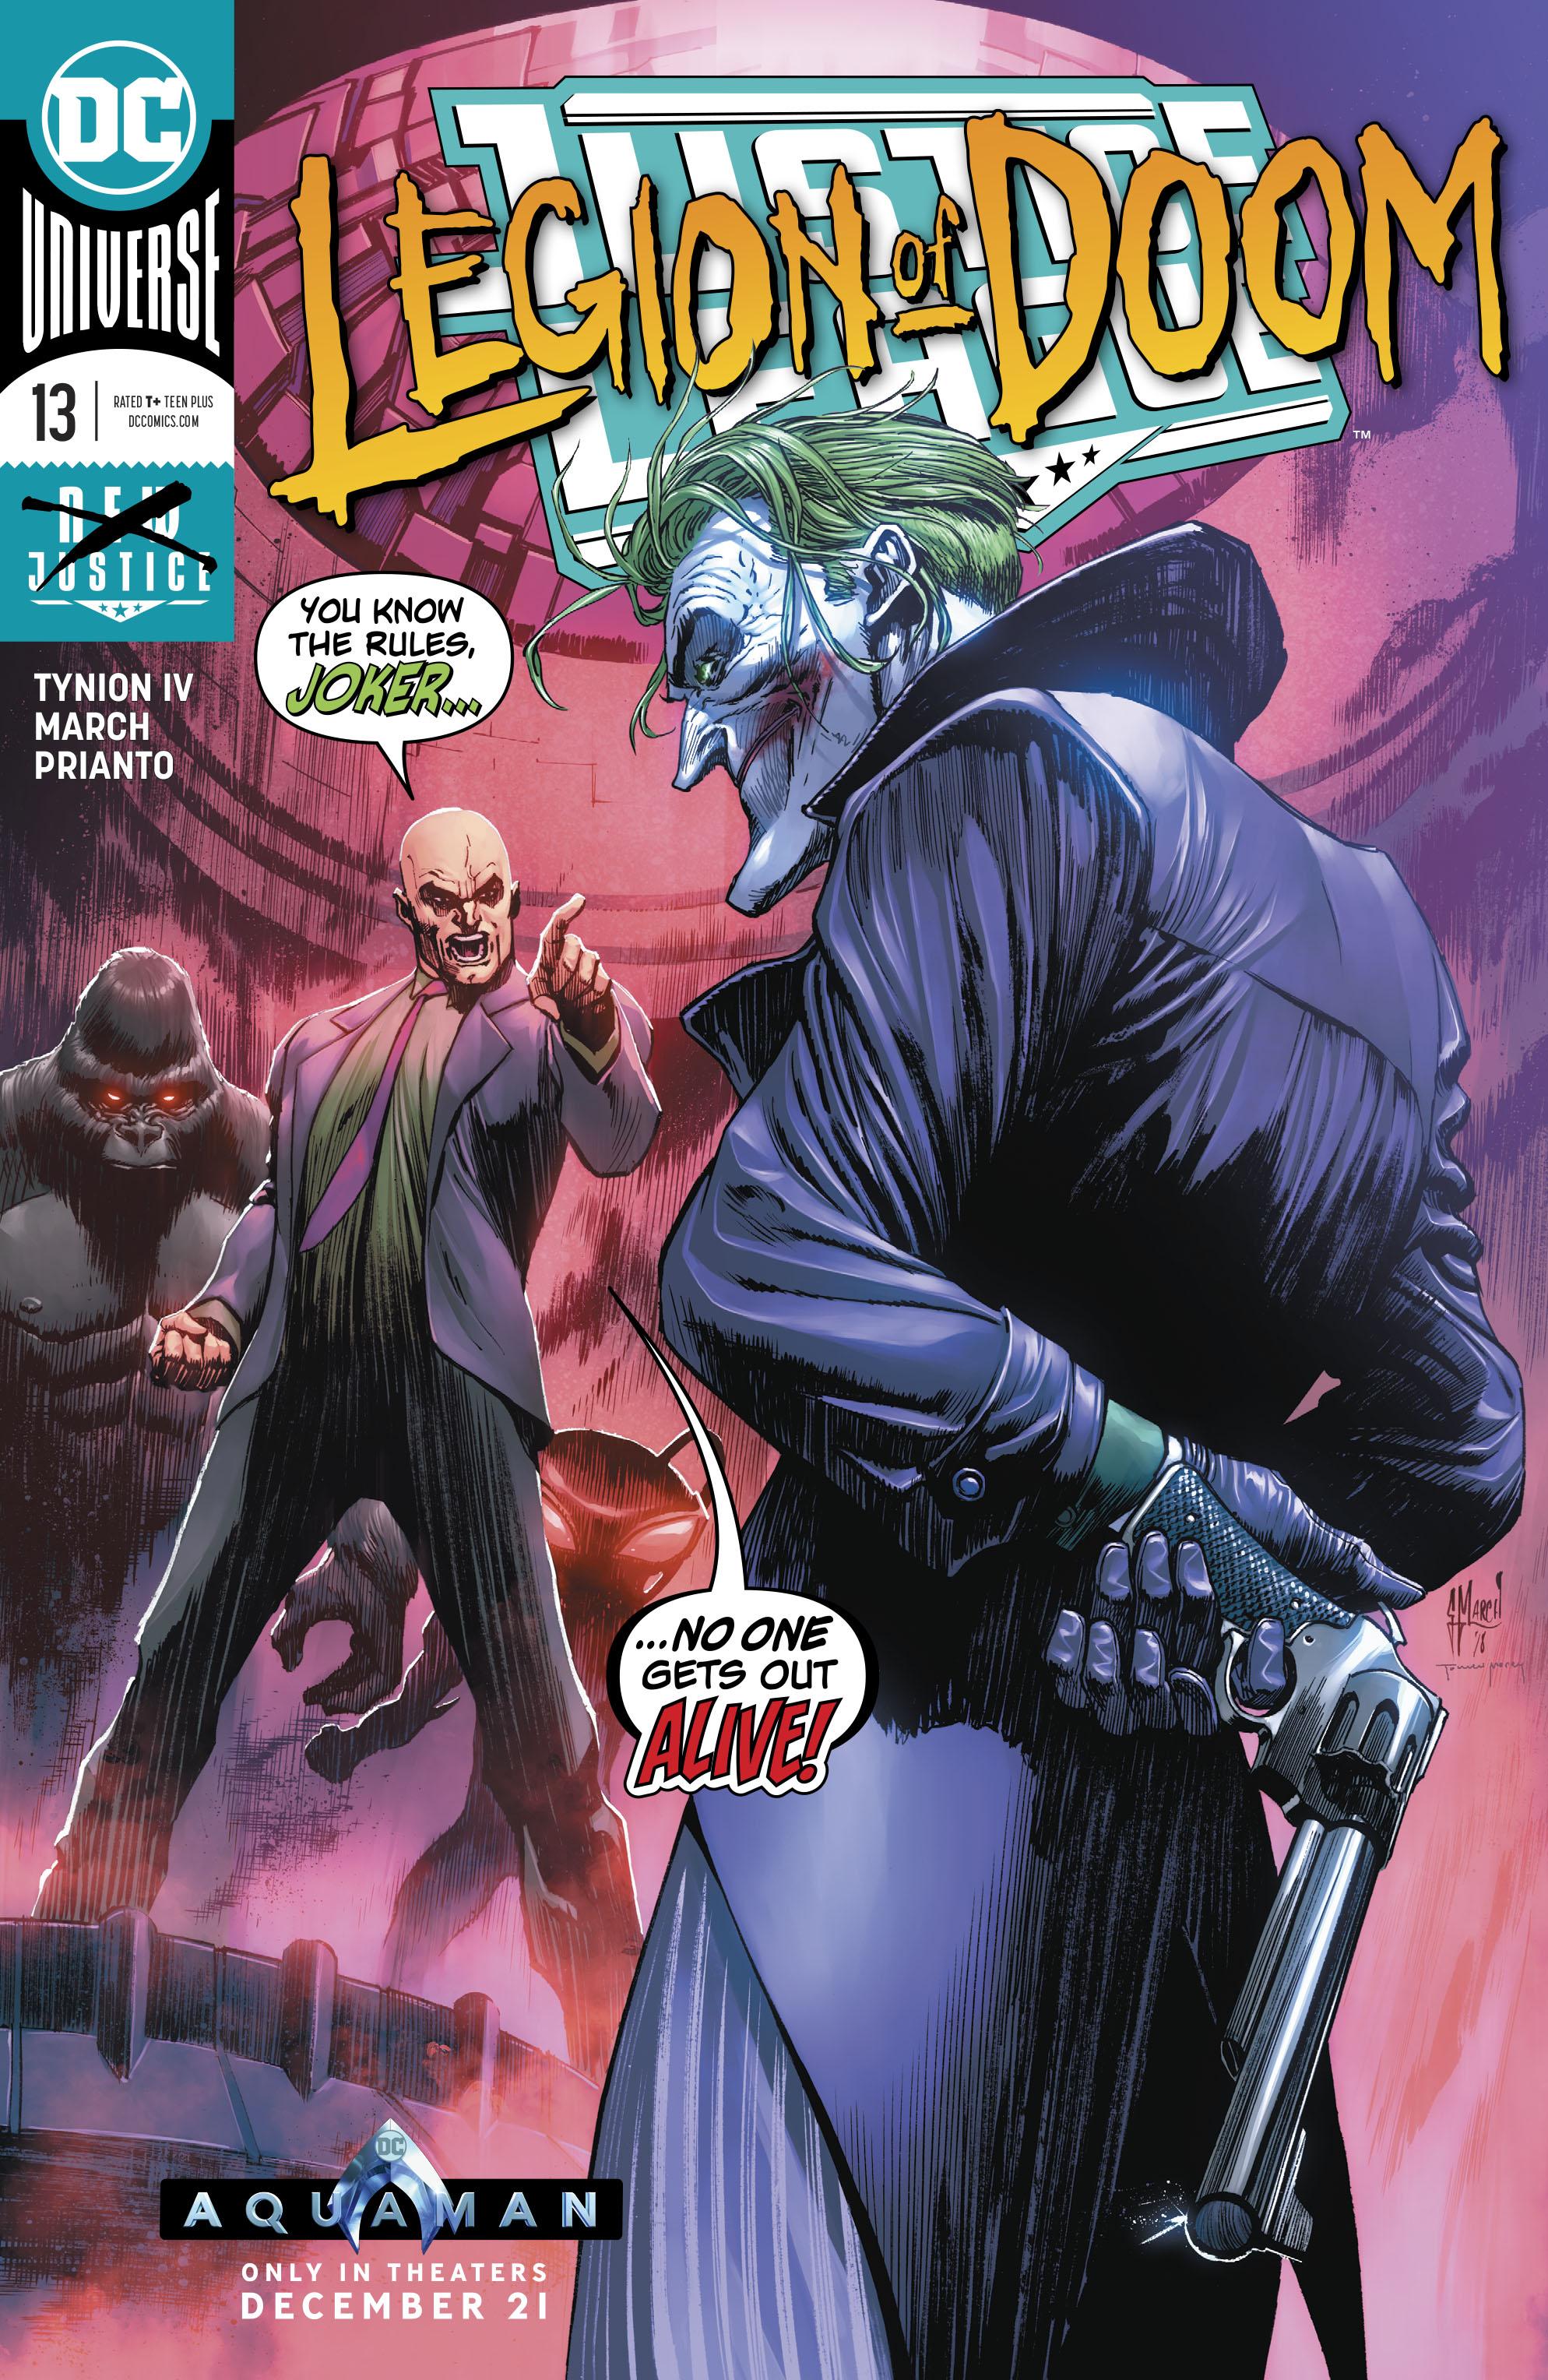 Justice League Vol. 4 #13